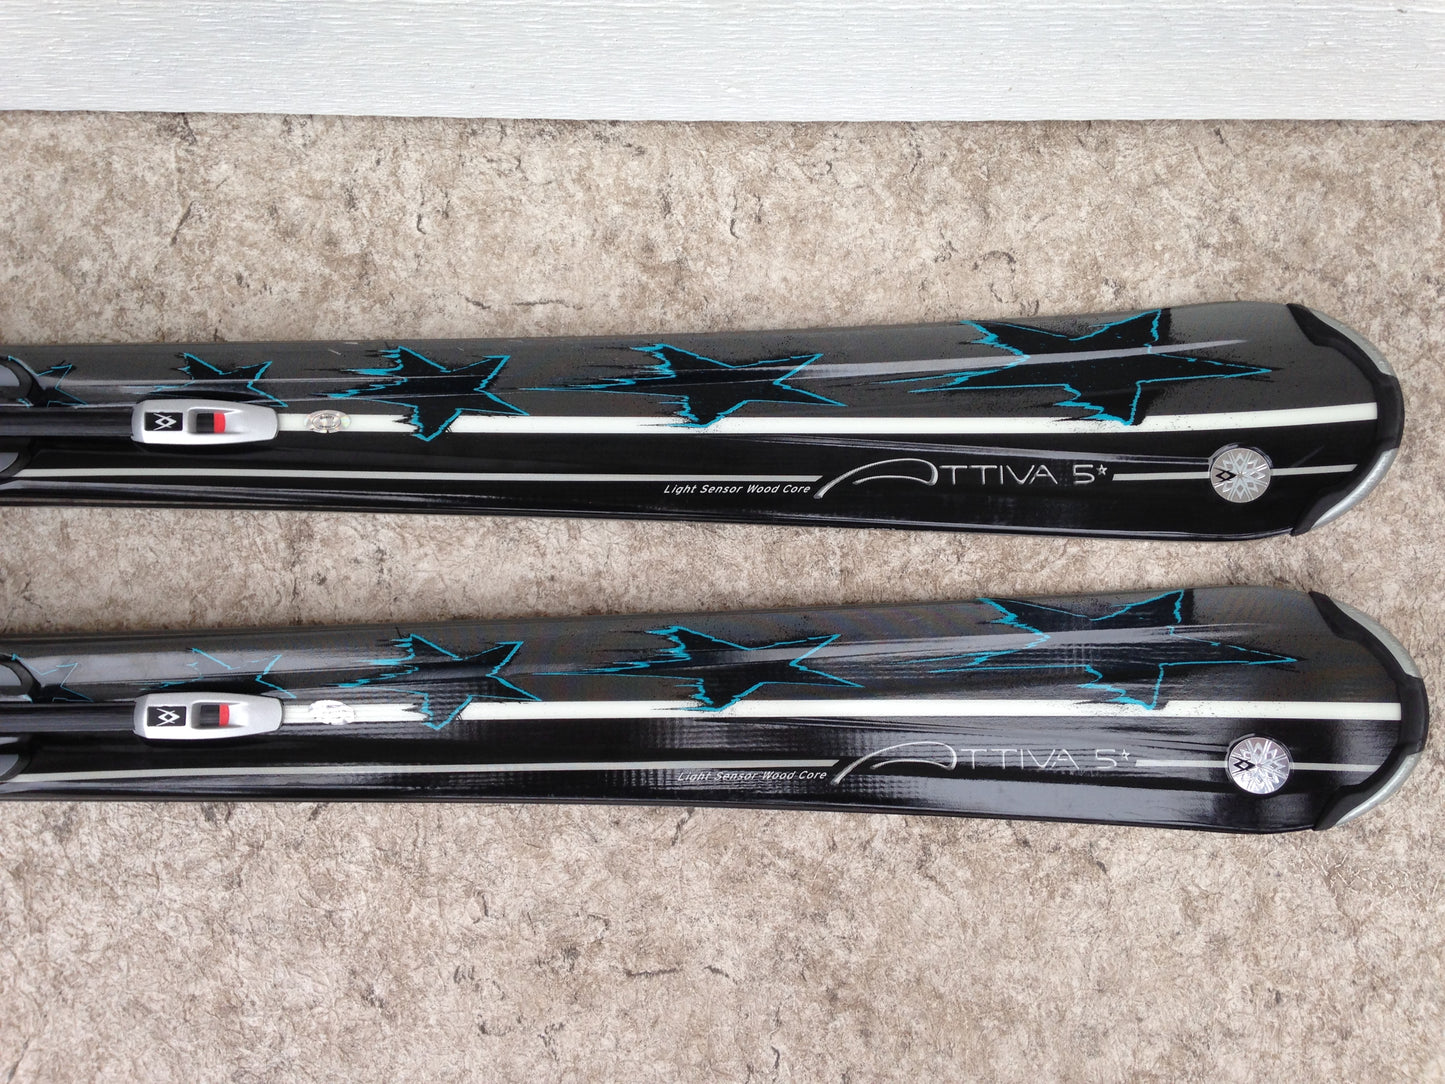 Ski 161 Volki Black Teal Parabolic With Bindings As New